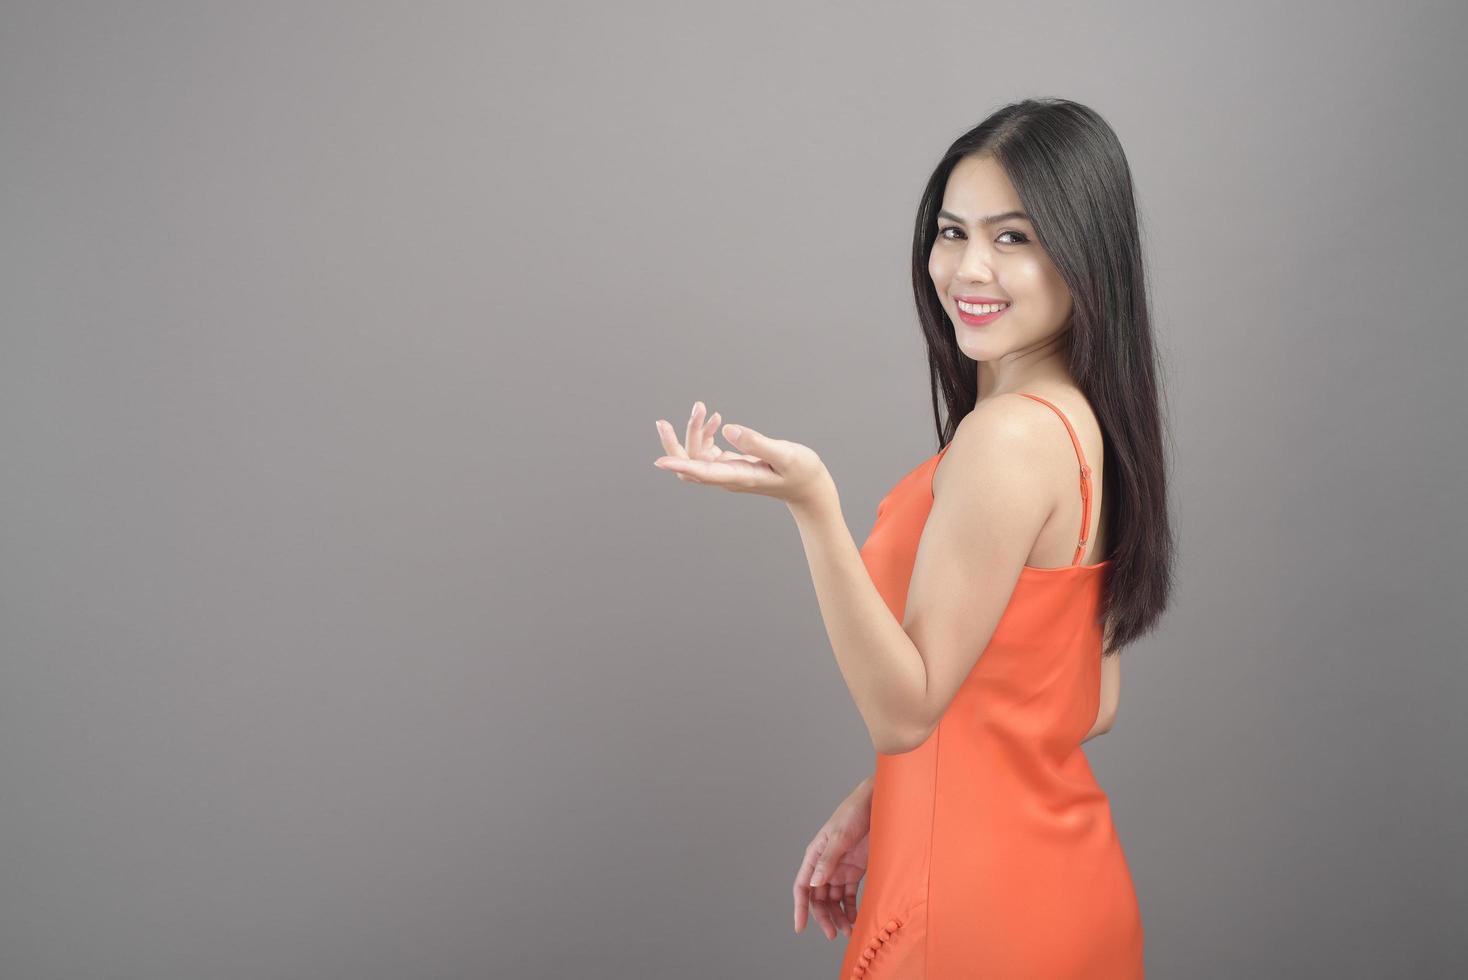 Fashion portrait of beautiful woman wearing orange dress isolated over gray background studio photo